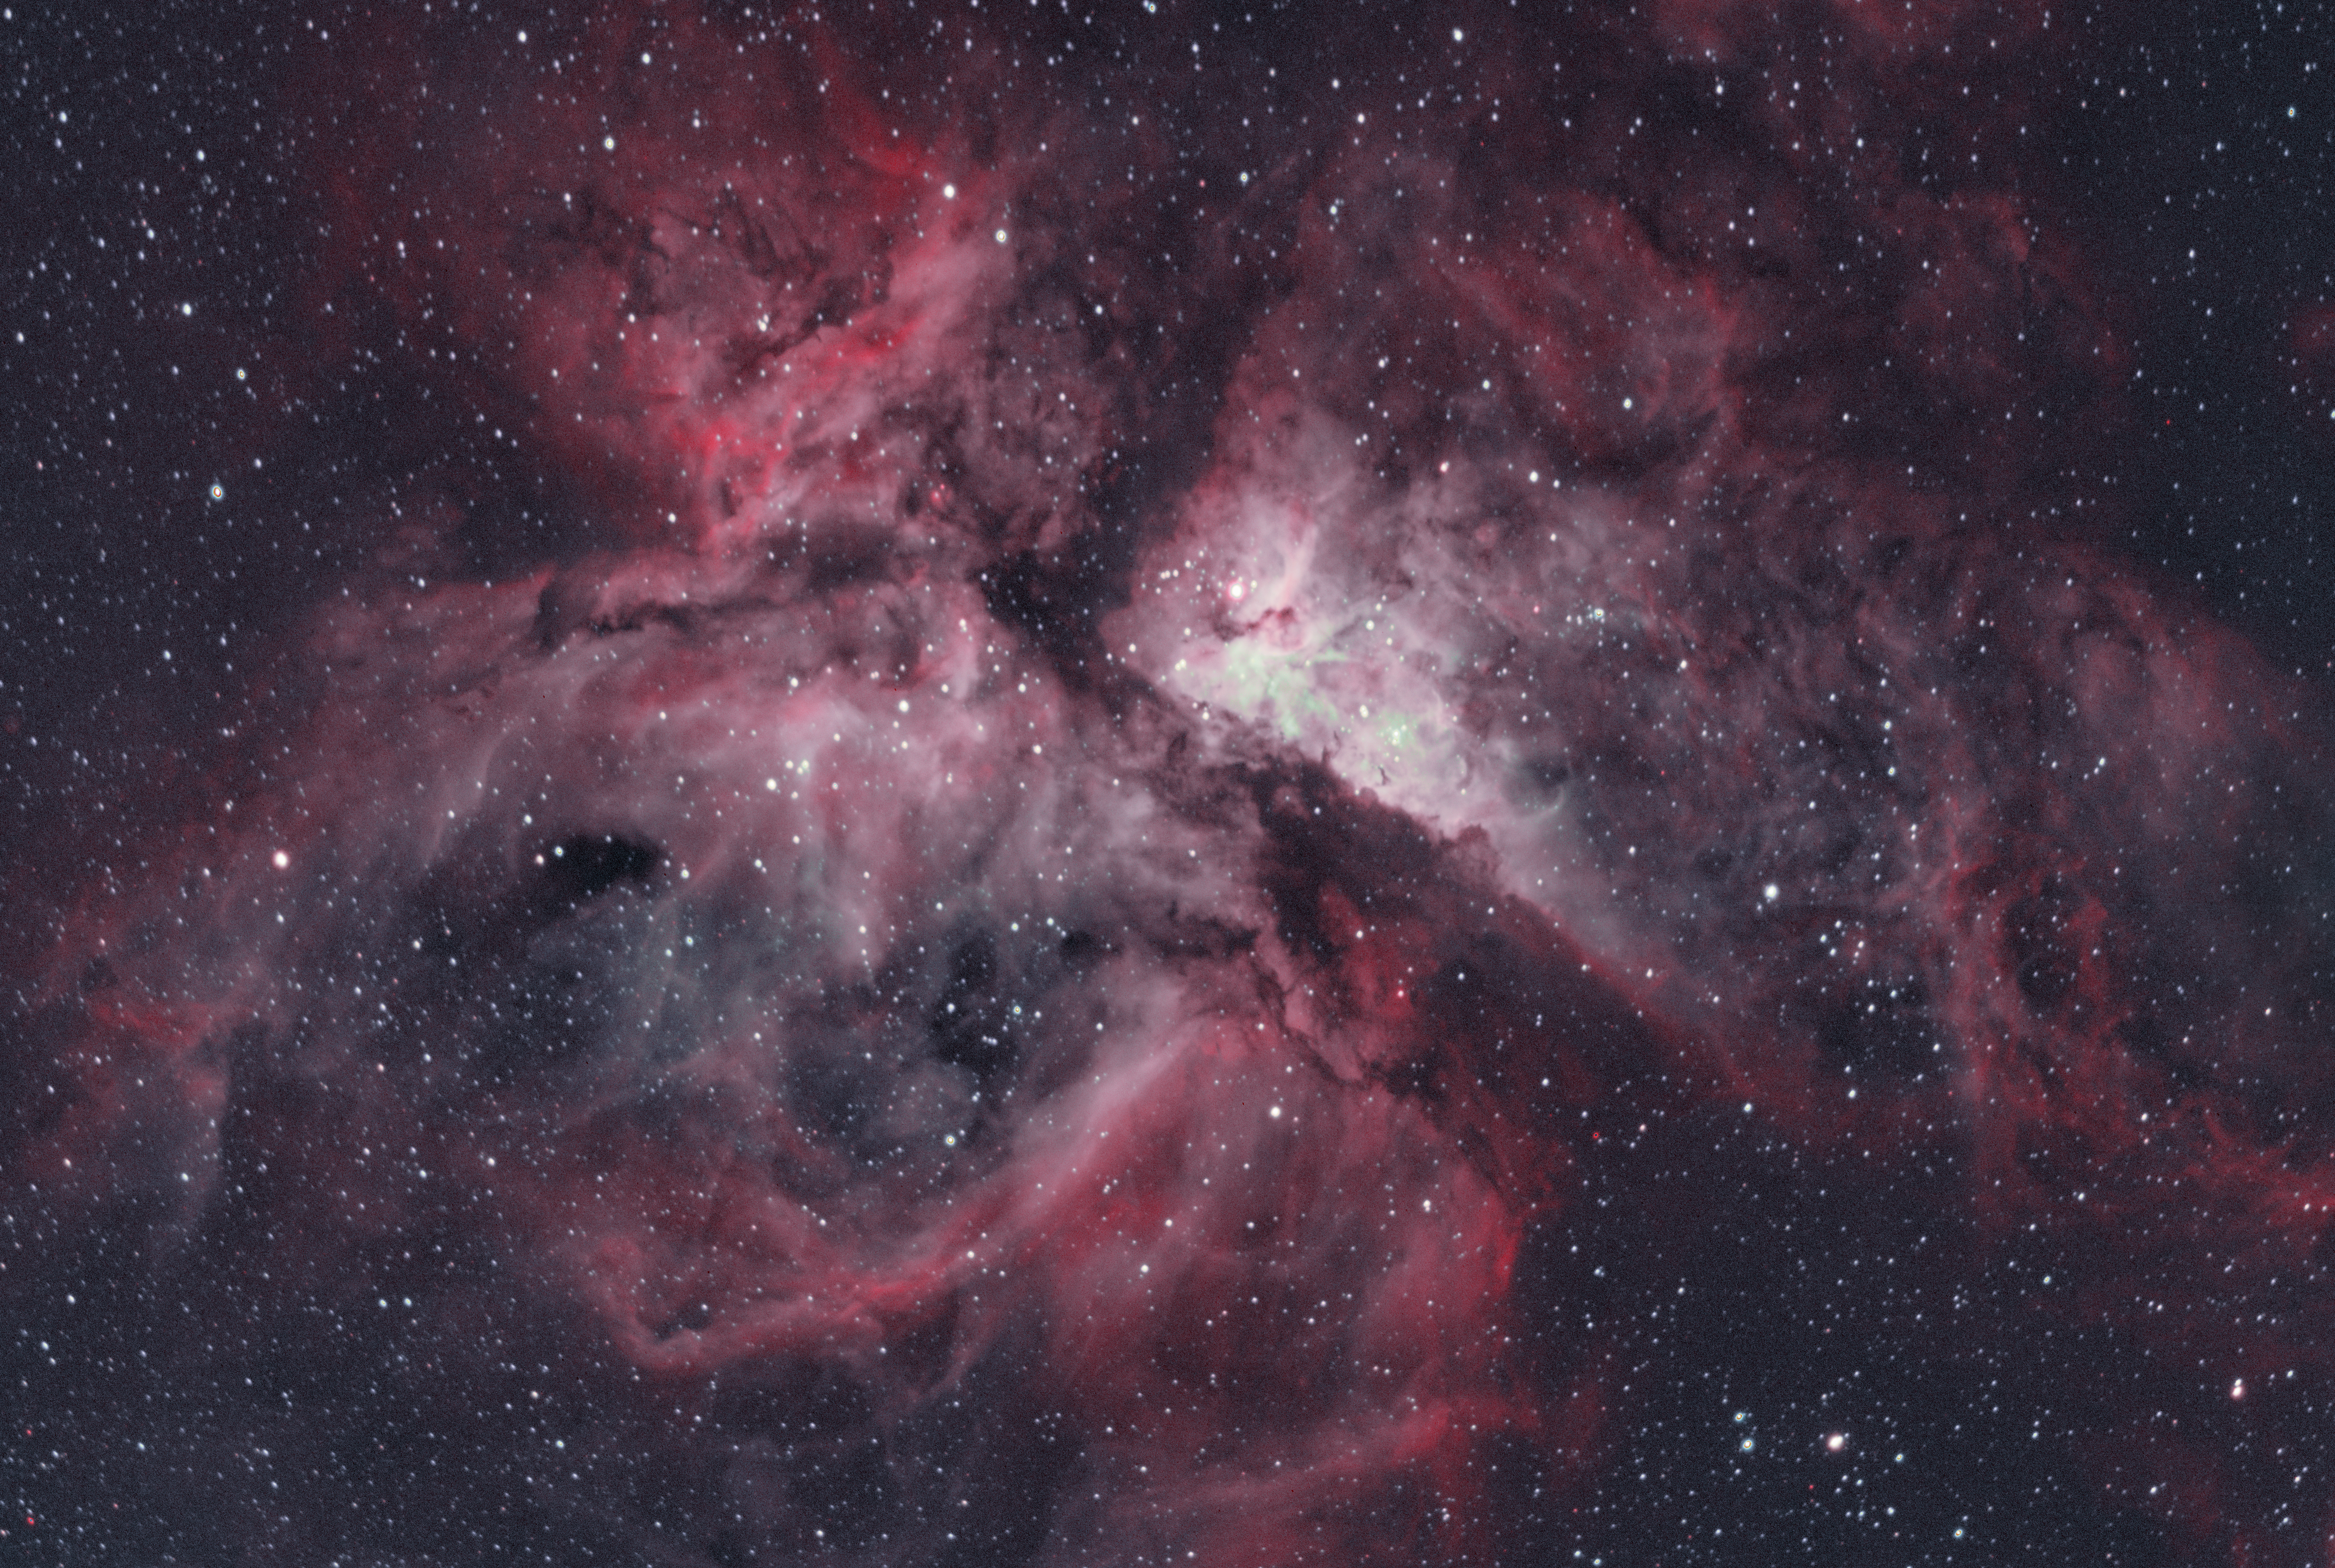 Carina Nebula William Optics GT71 and ASI183MM Pro camera